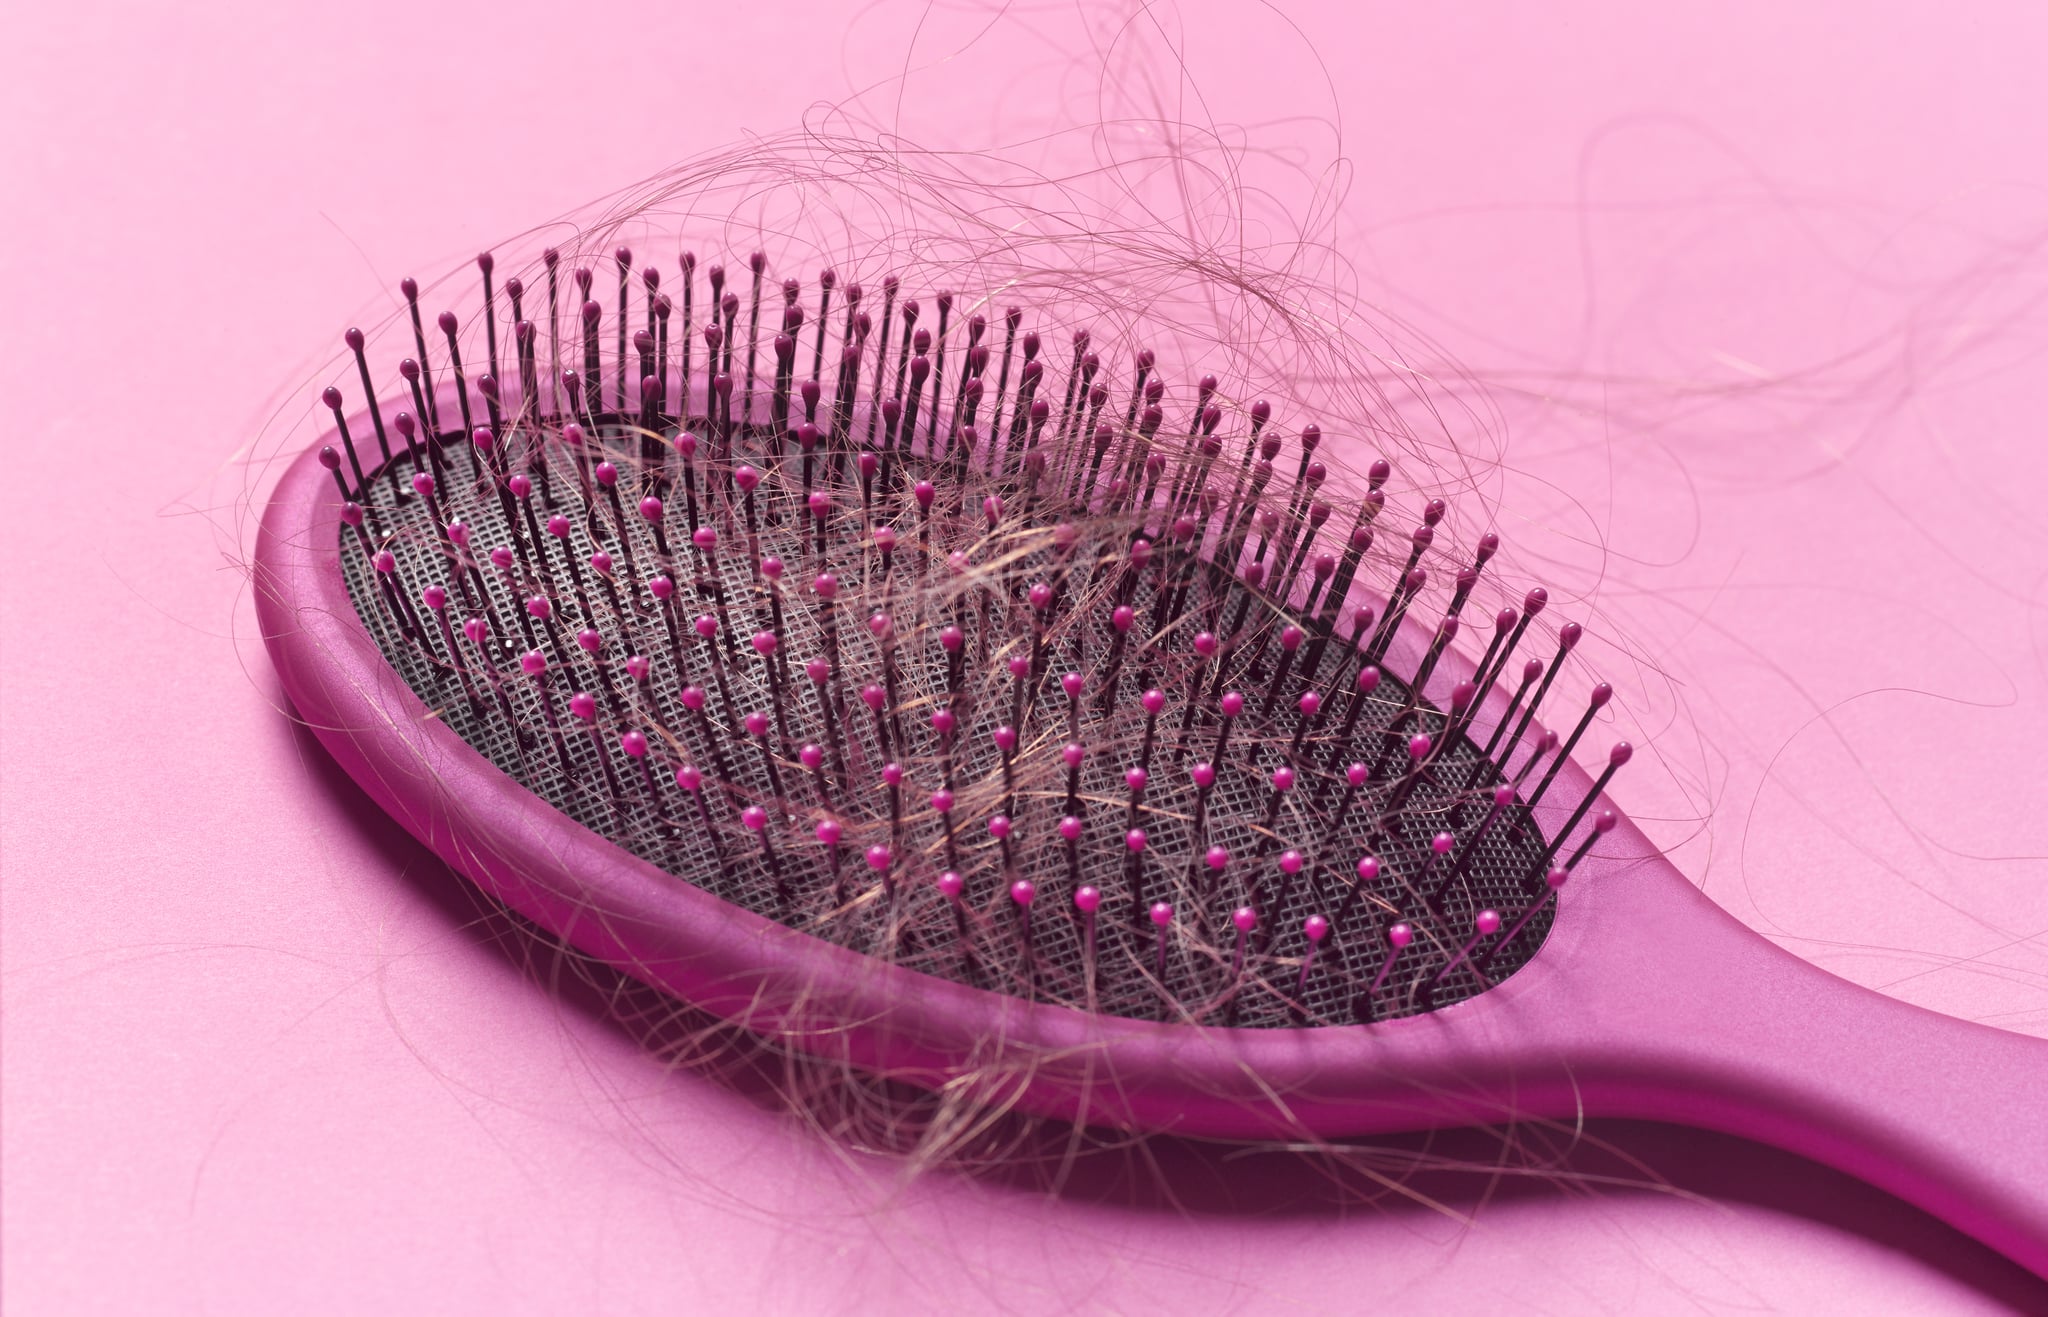 Temporary Hair Loss May Be a Lingering Symptom of COVID-19 In Survivors